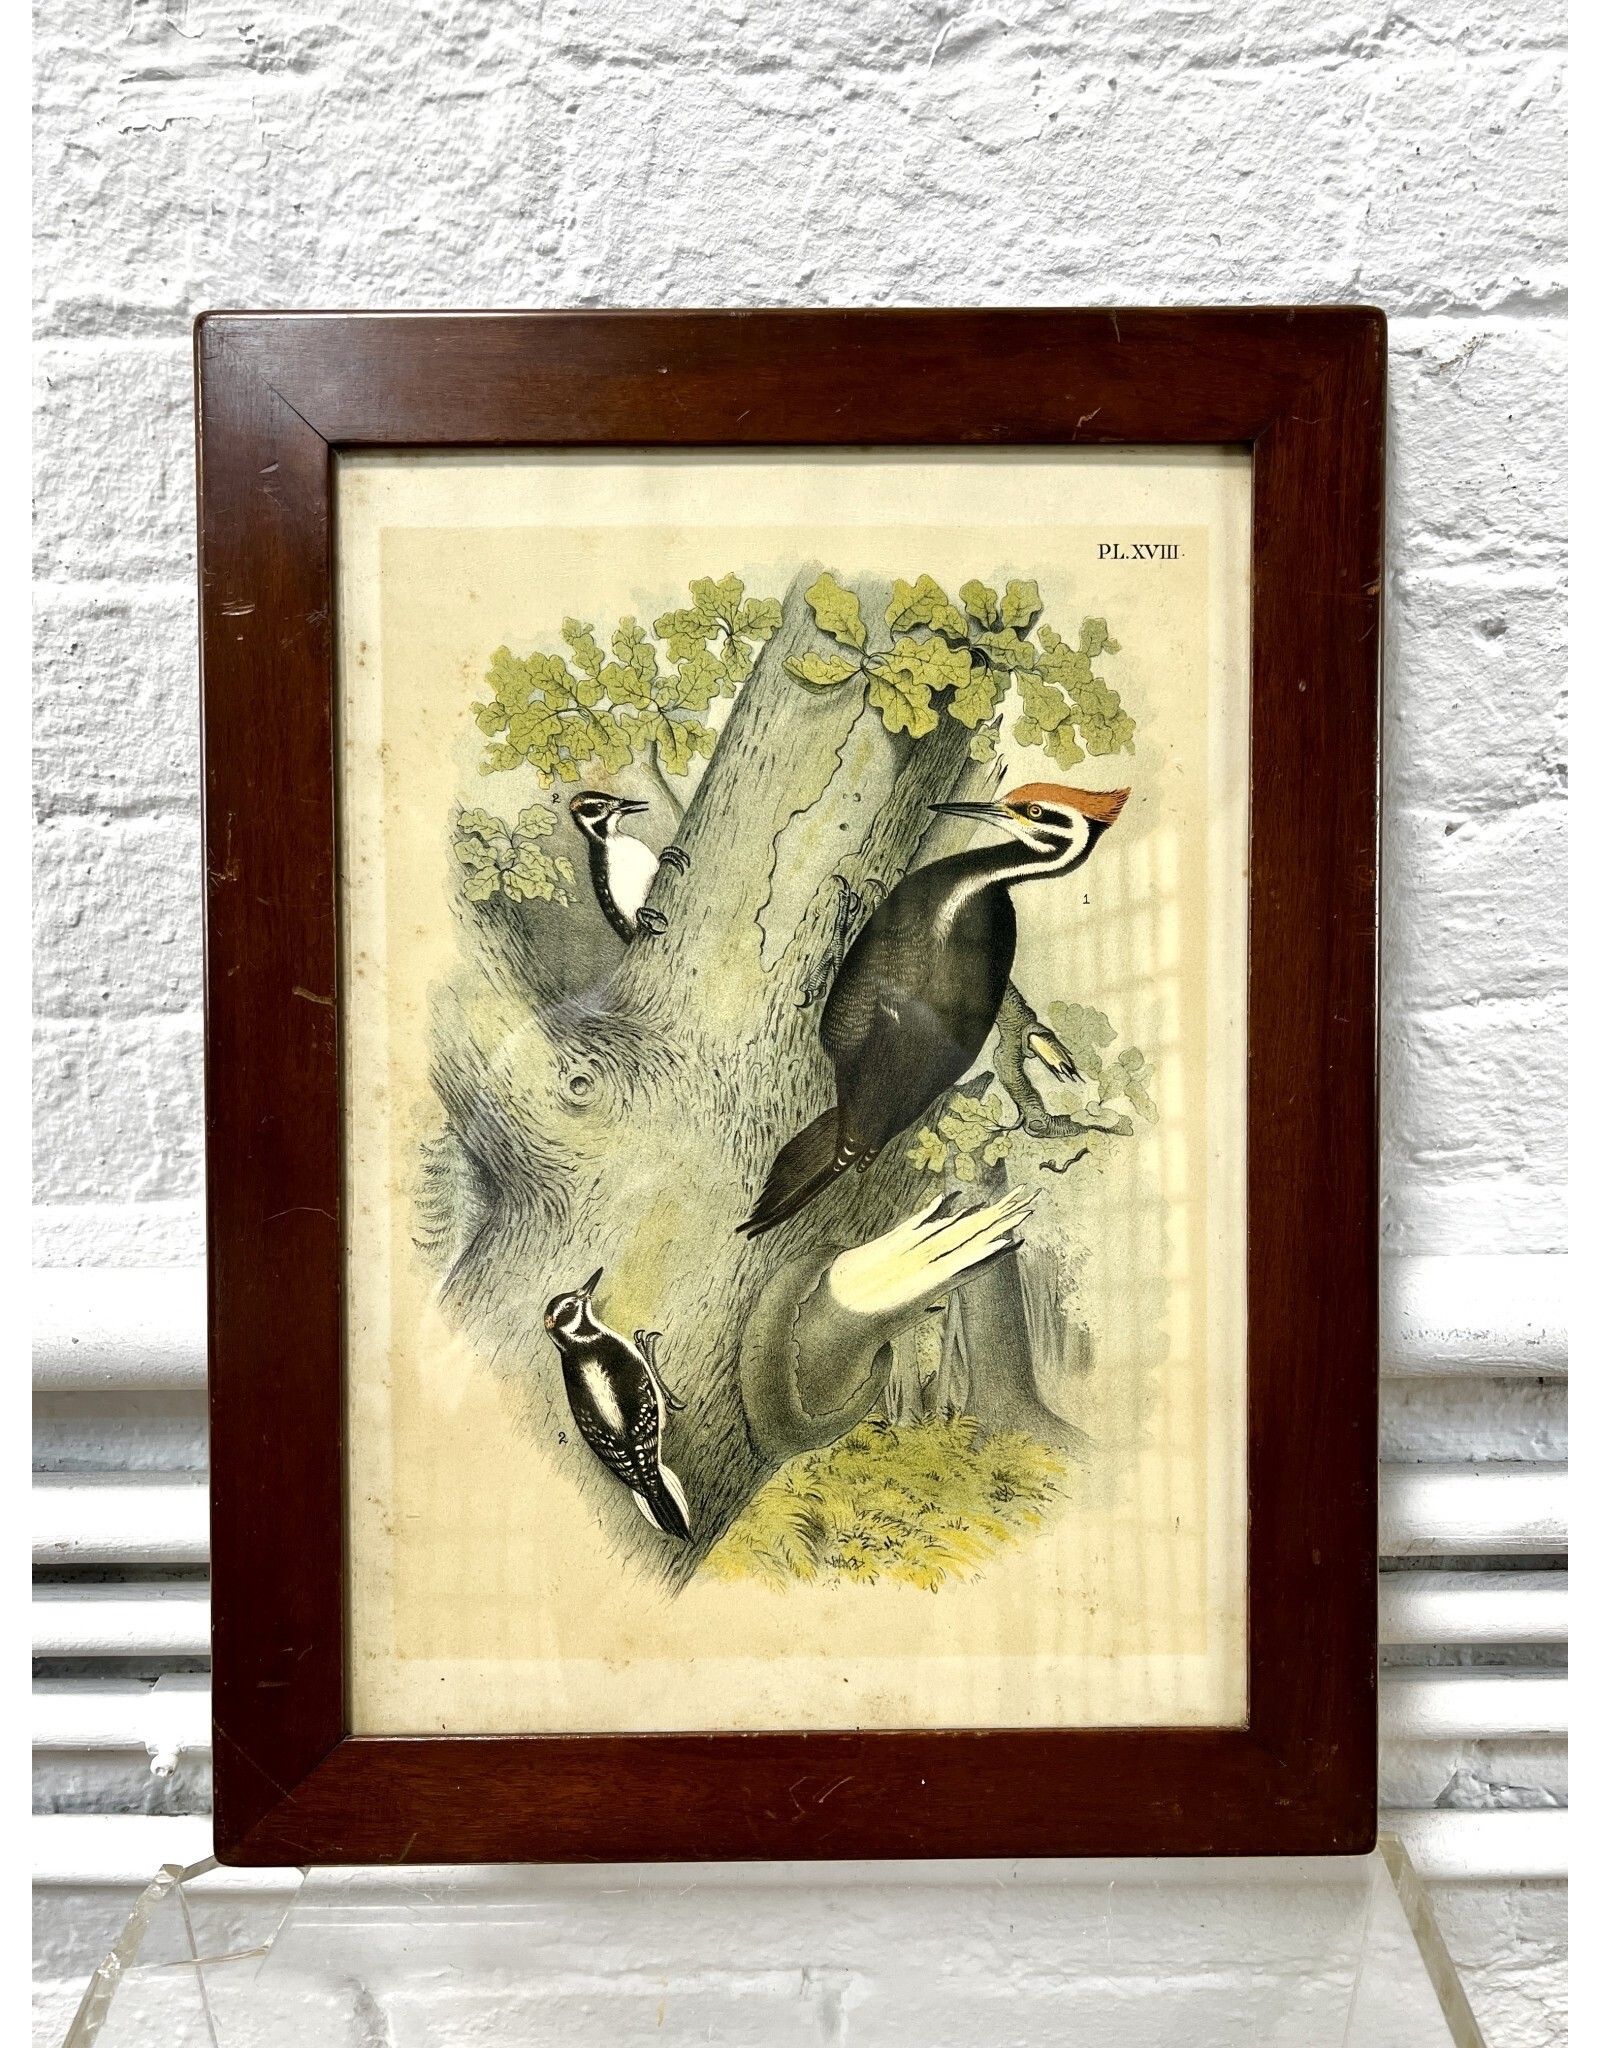 Framed Vintage Style Ornithological Study Print